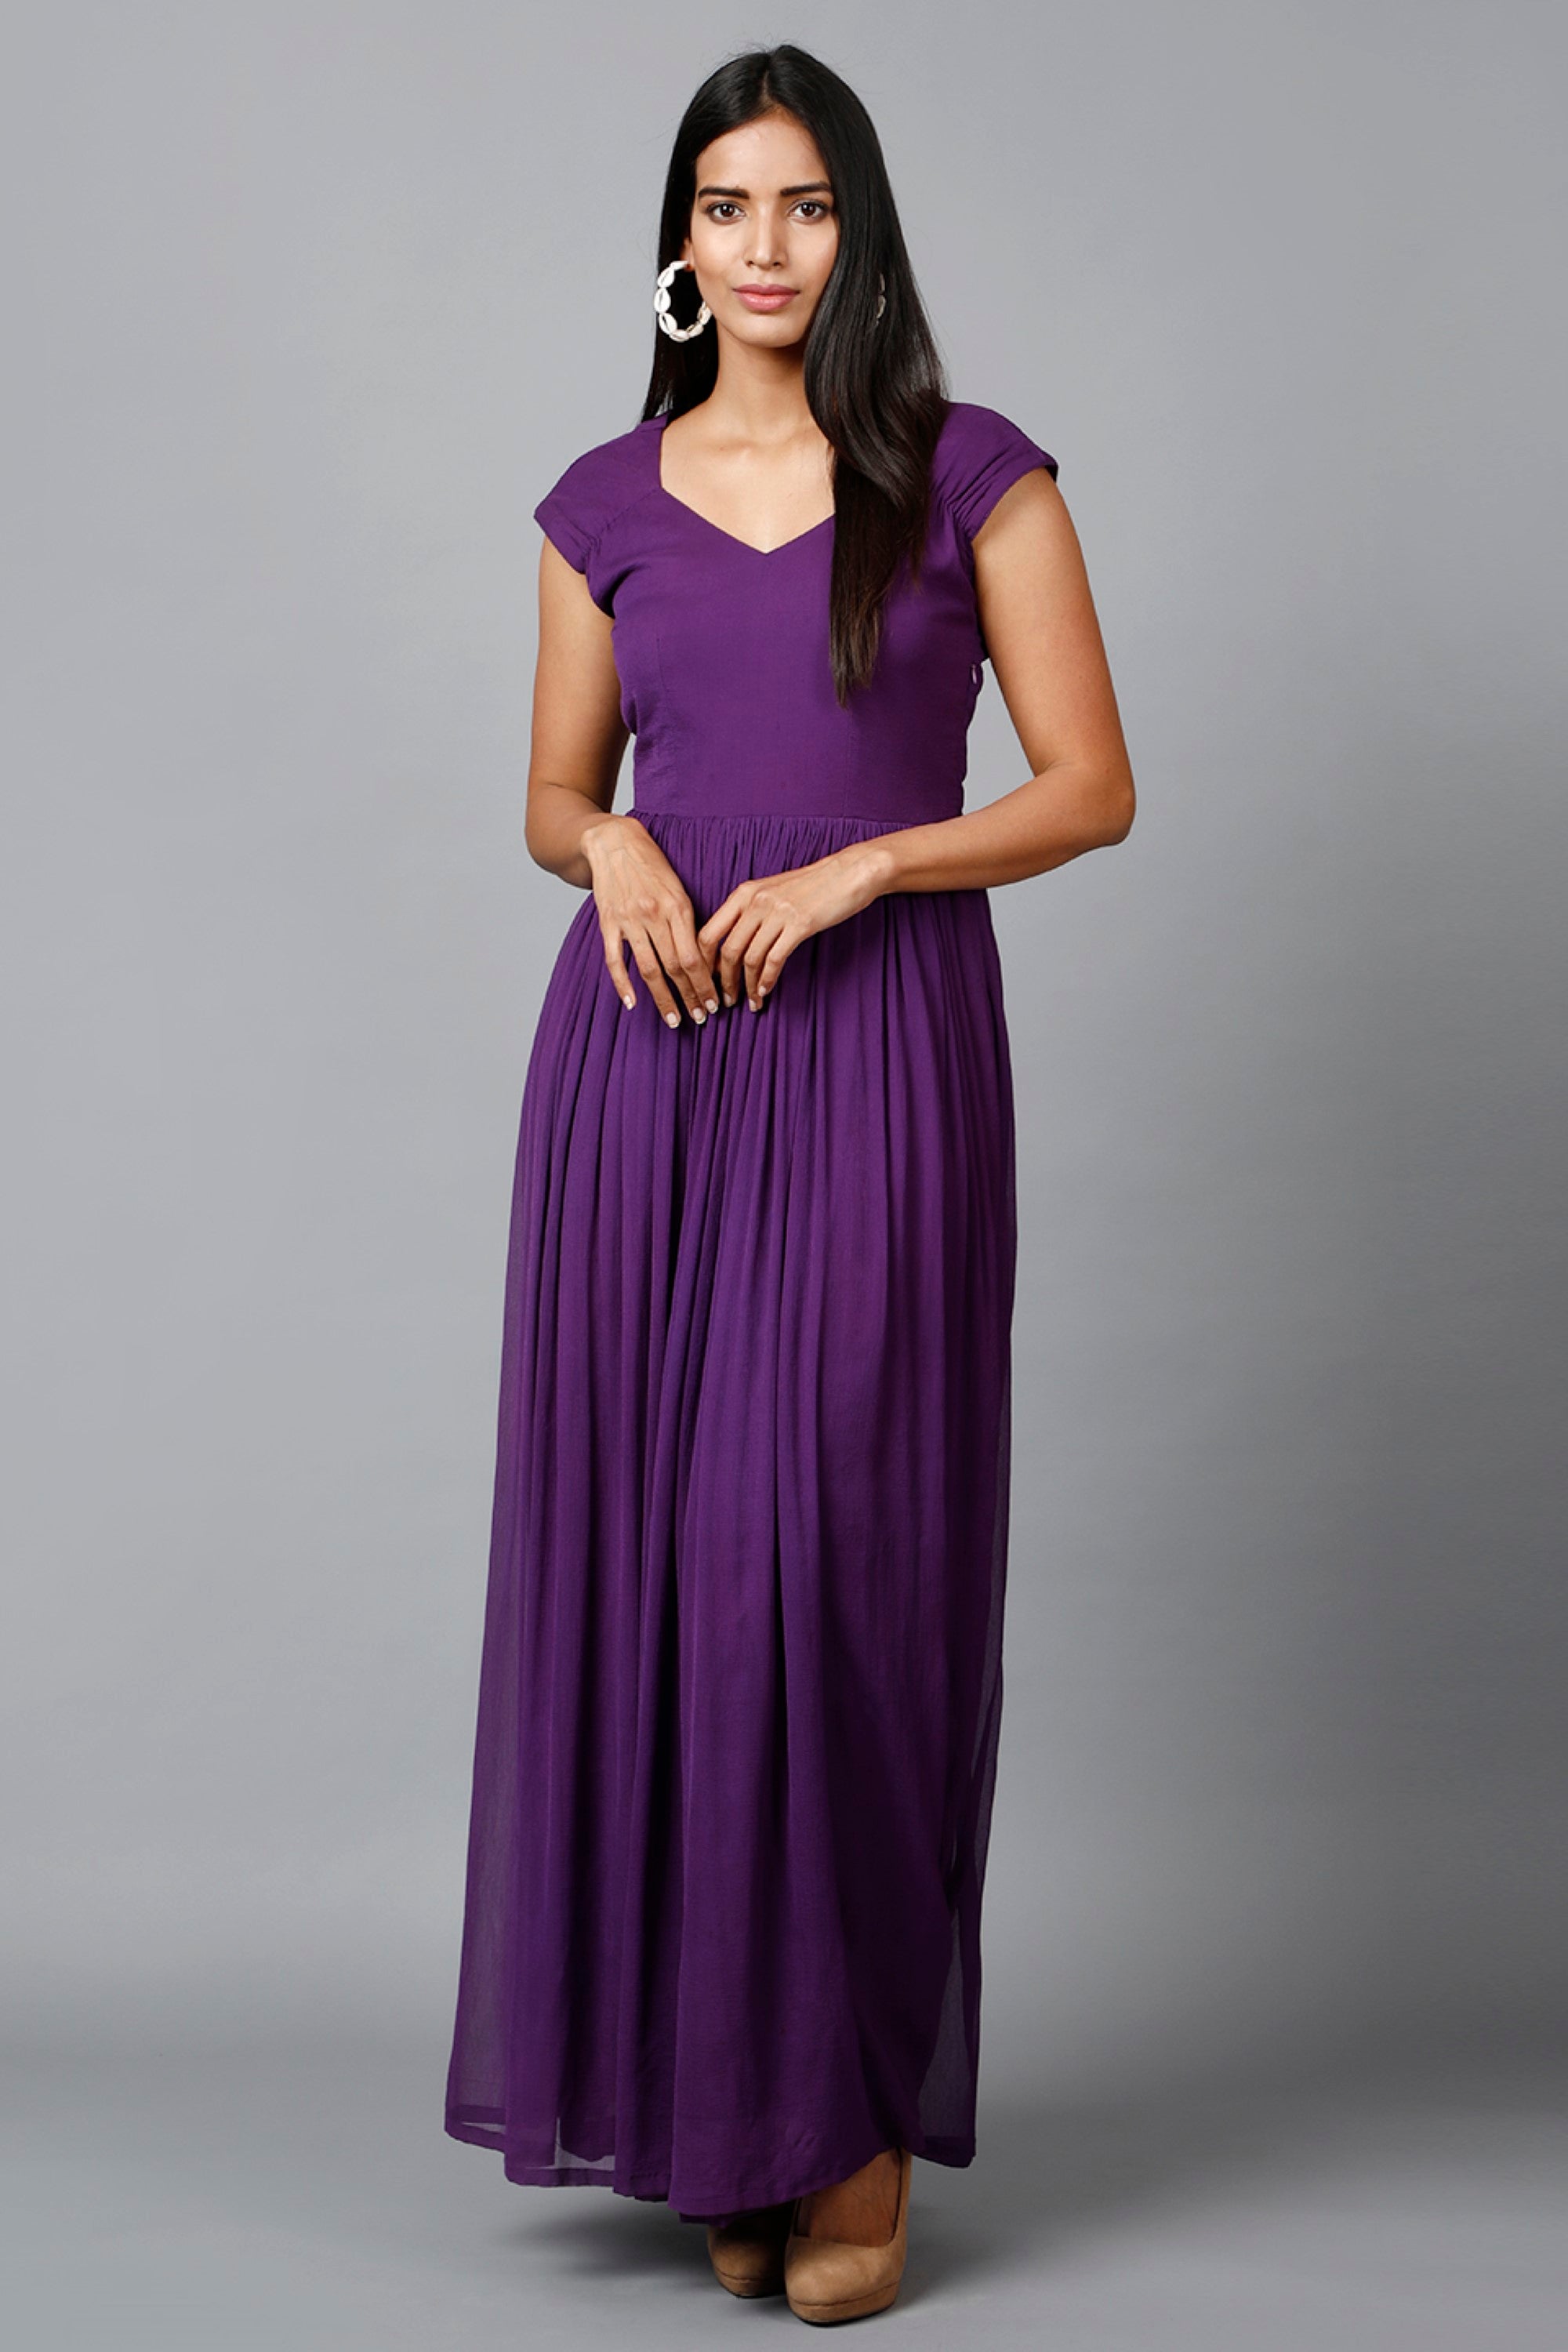 Women's Drape Chiffon  Gown In Purple  - MIRACOLOS by Ruchi